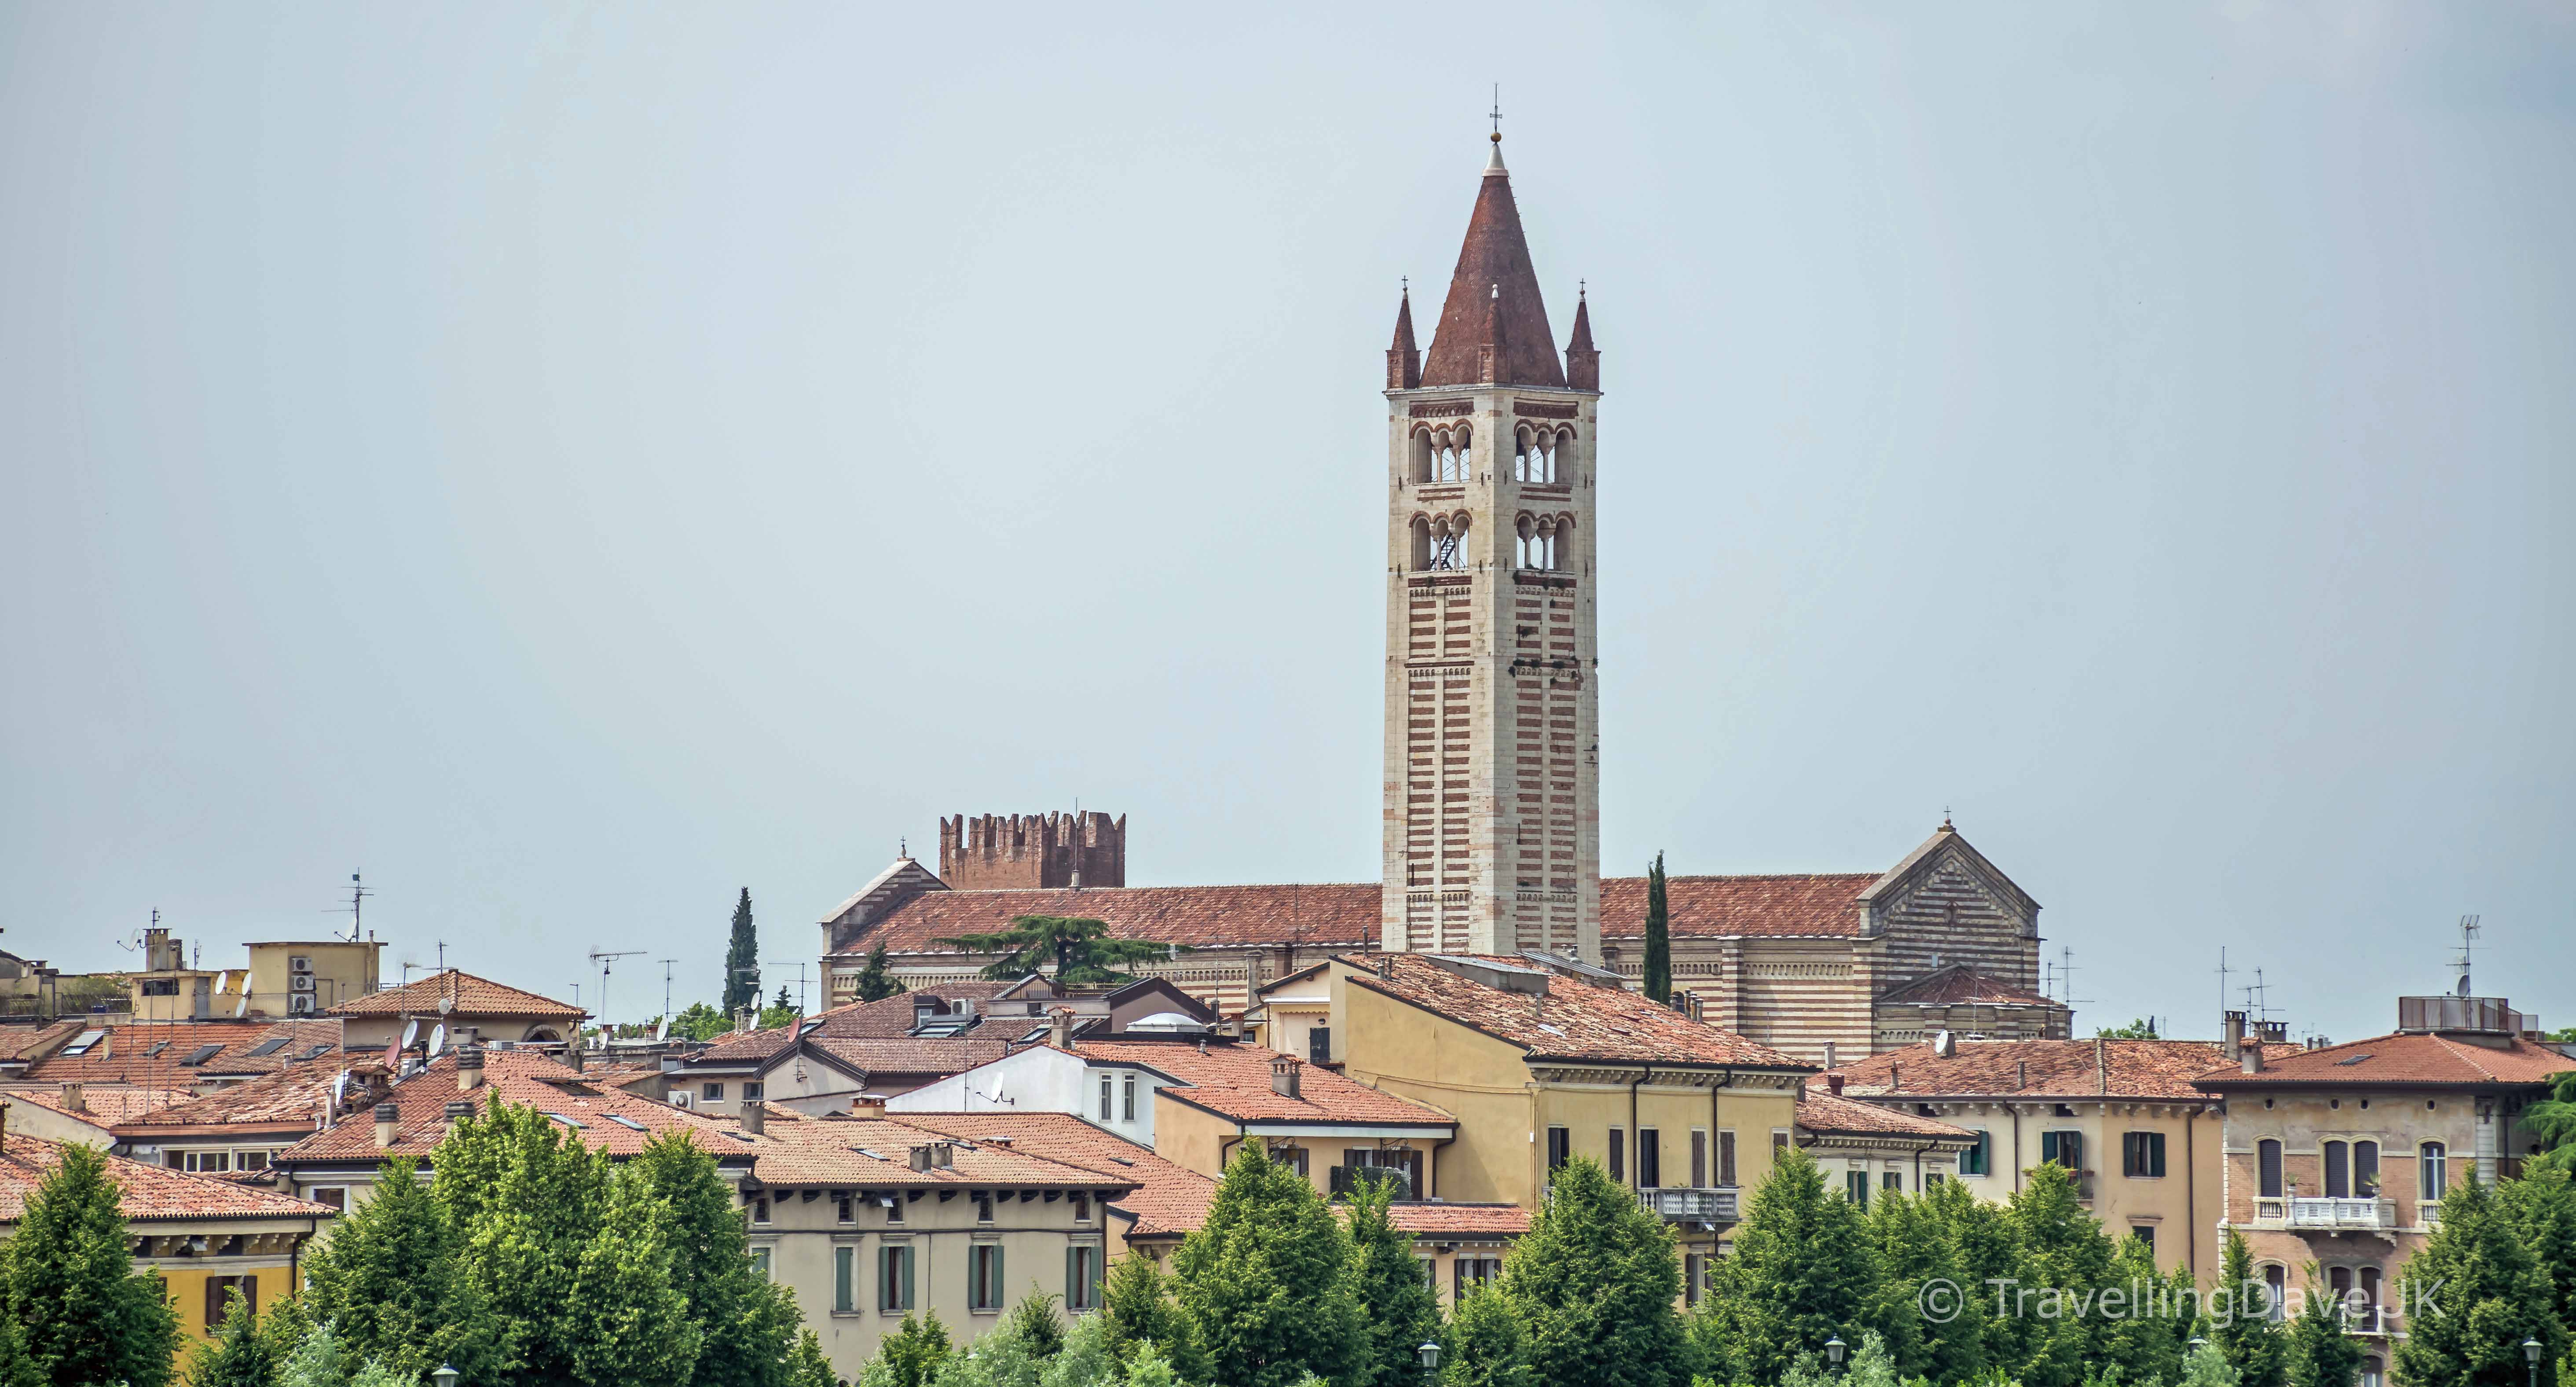 View of San Zeno church in Verona